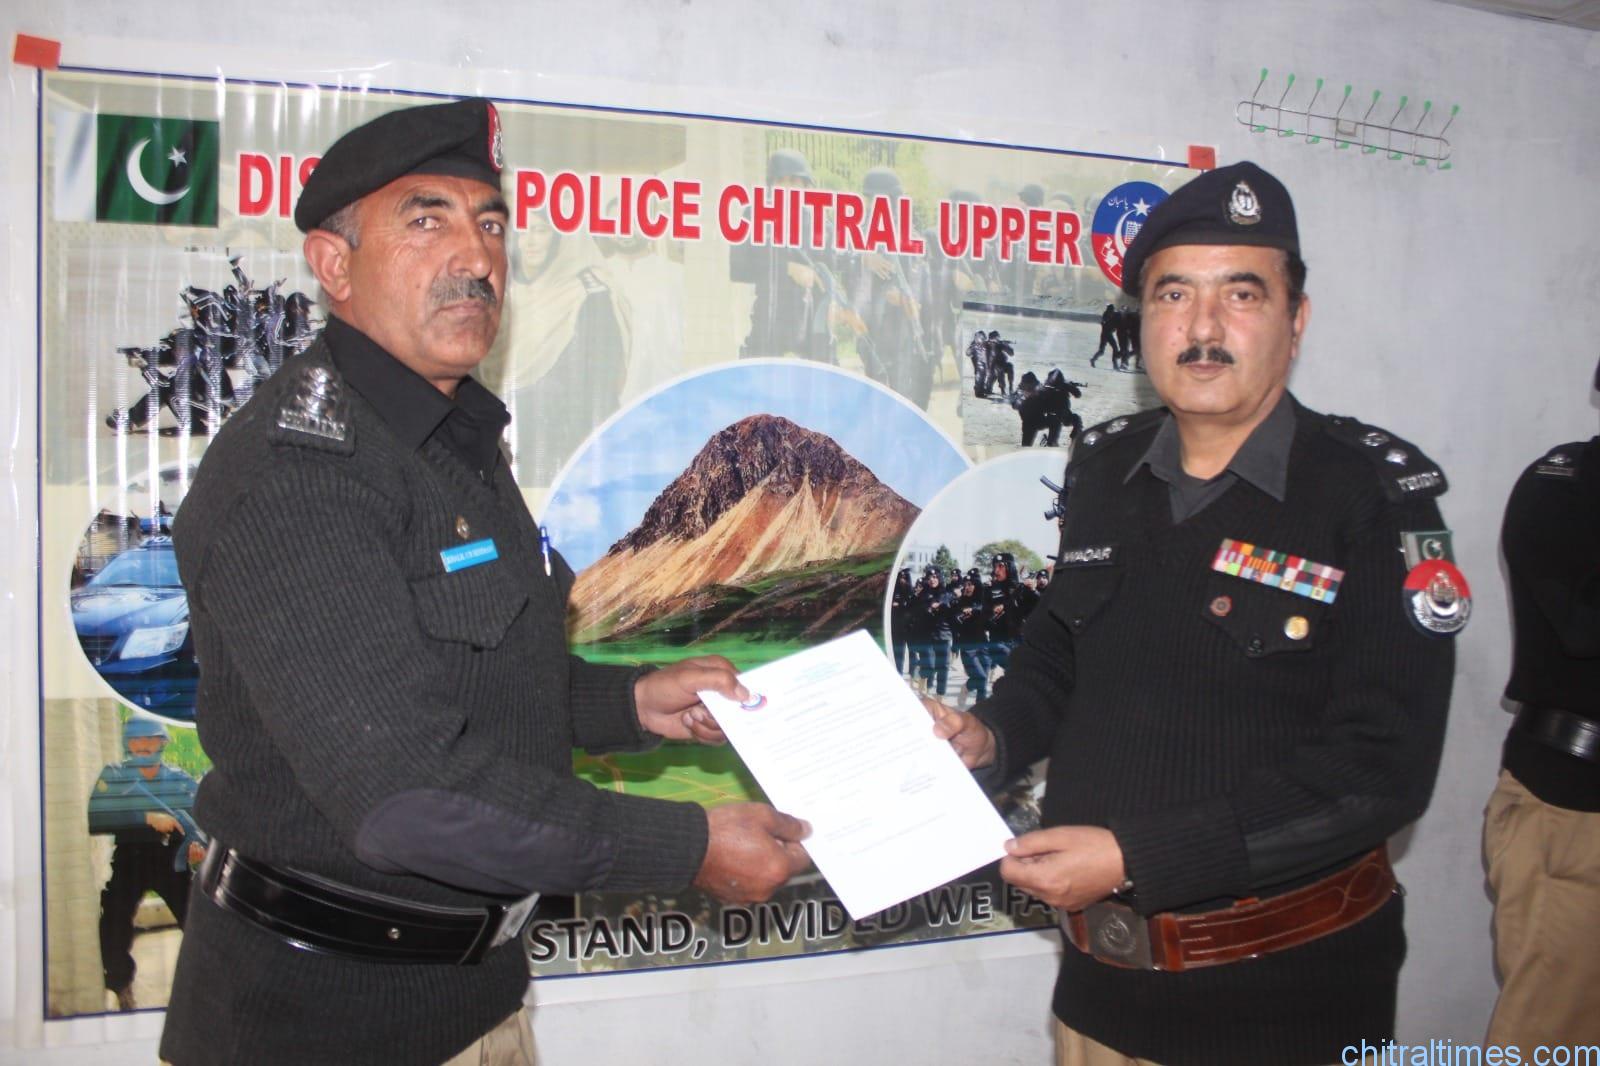 Police upper chitral 3